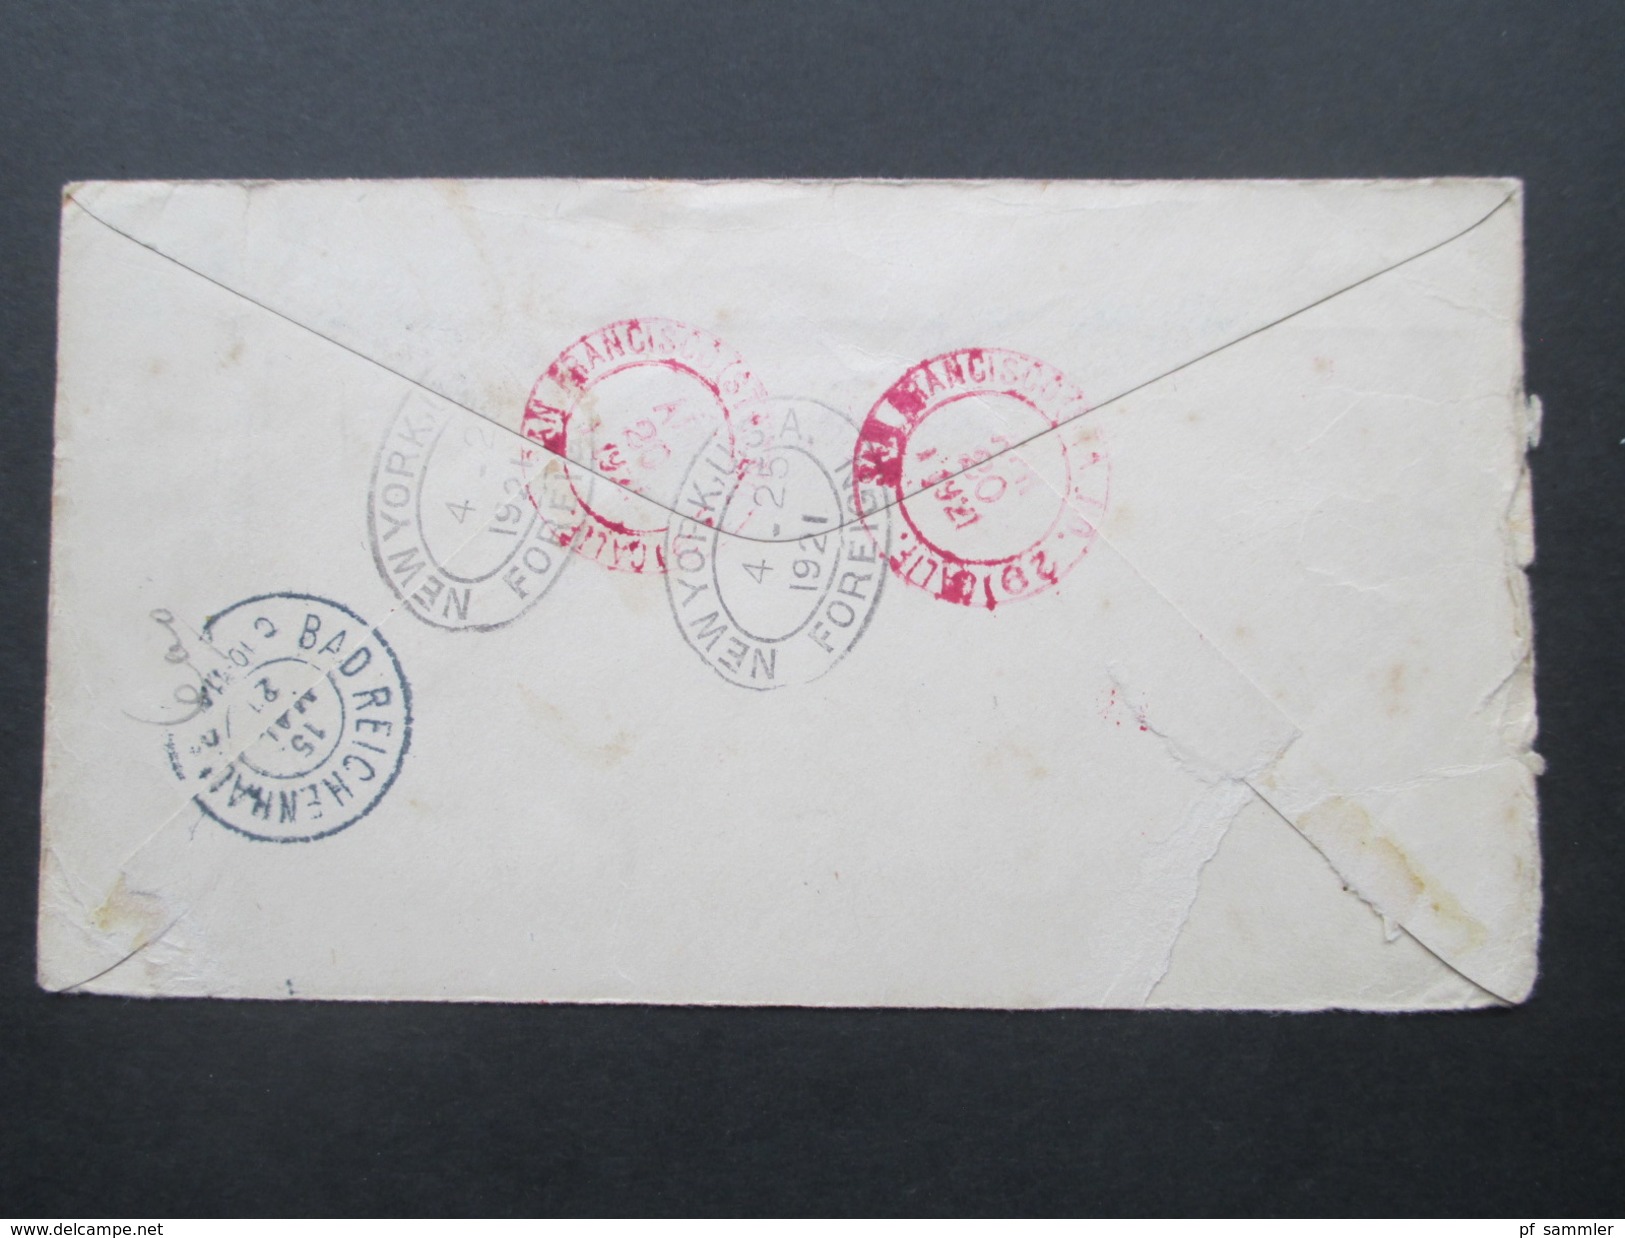 USA 1921 Ausgabe 1907 Franklin Nr. 166/169 R-Brief. Rote Stempel San Francisco-Bad Reichenhall. Return Receipt Requested - Covers & Documents